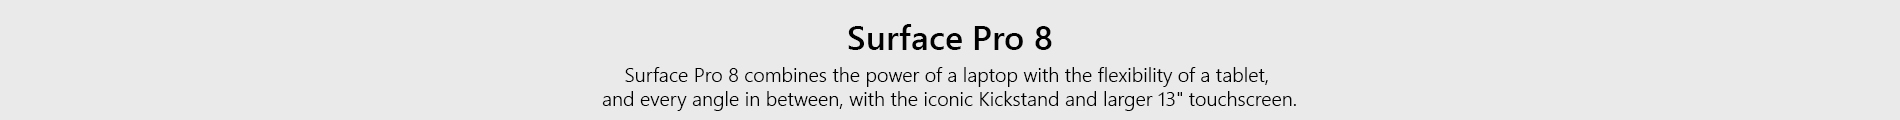 Microsoft Surface Header Landing Page 09.27.21 Tile 04